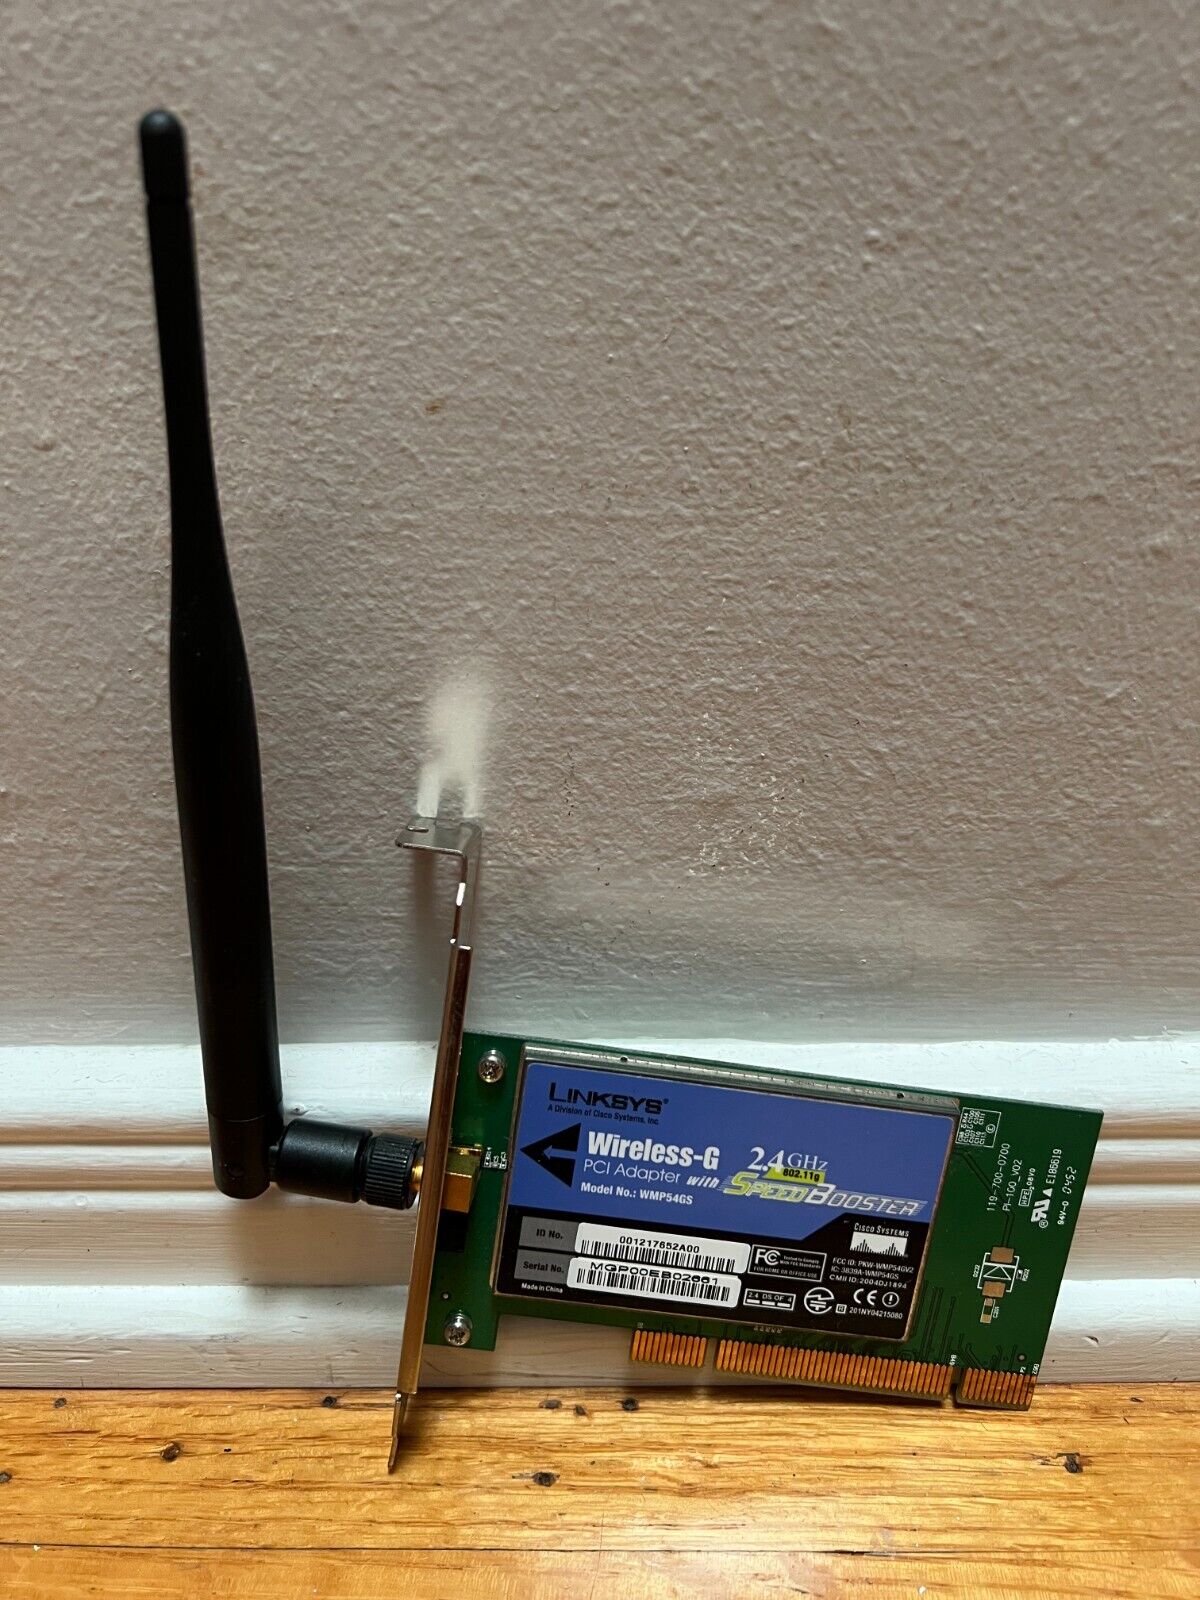 Linksys WMP54GS Cisco PCI Wireless G Card SpeedBooster with Antenna